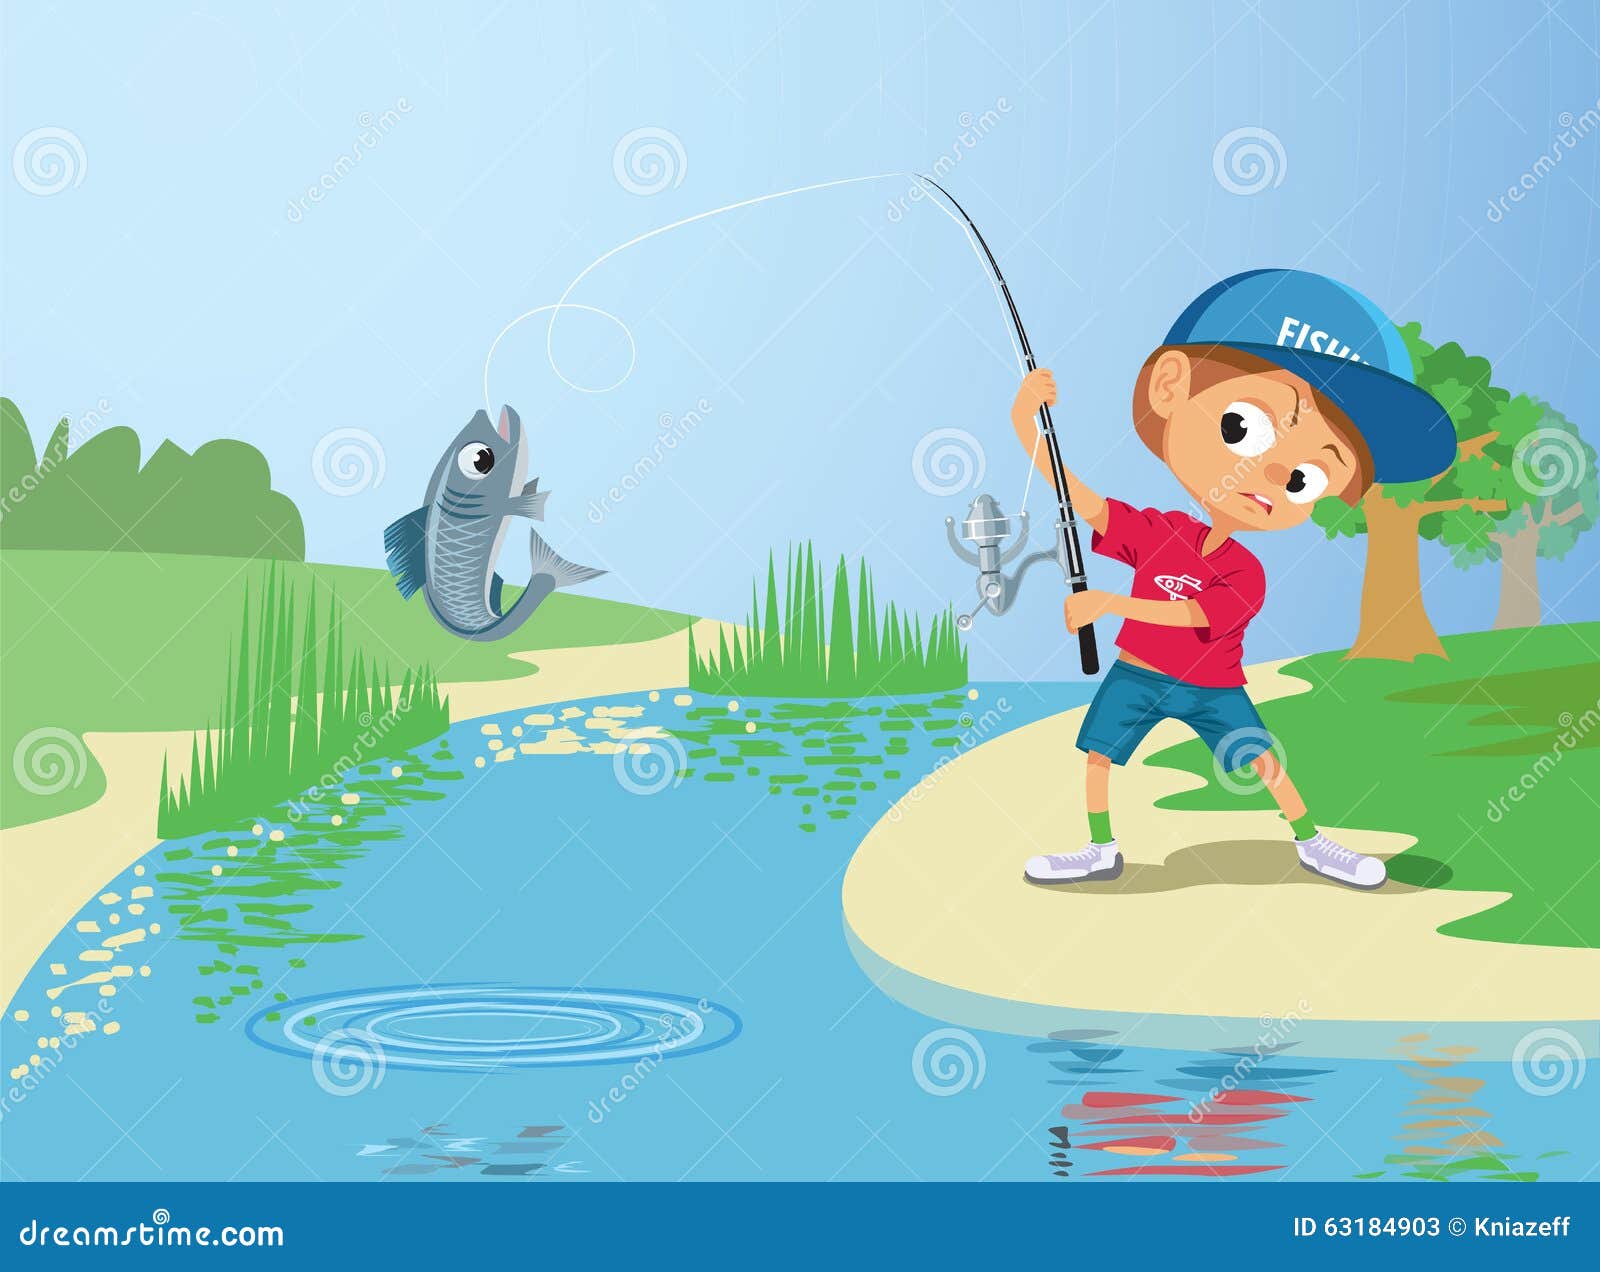 Boy fishing in a river stock vector. Illustration of scene - 63184903